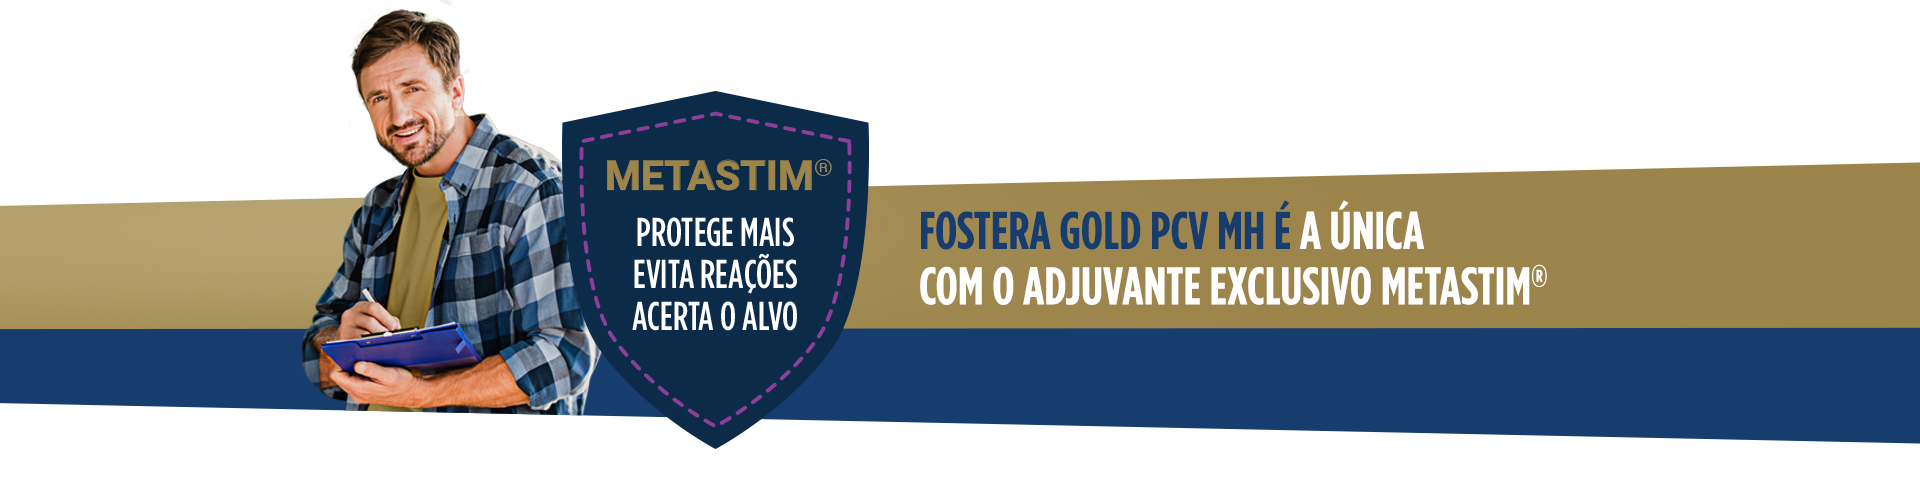 Fostera Gold